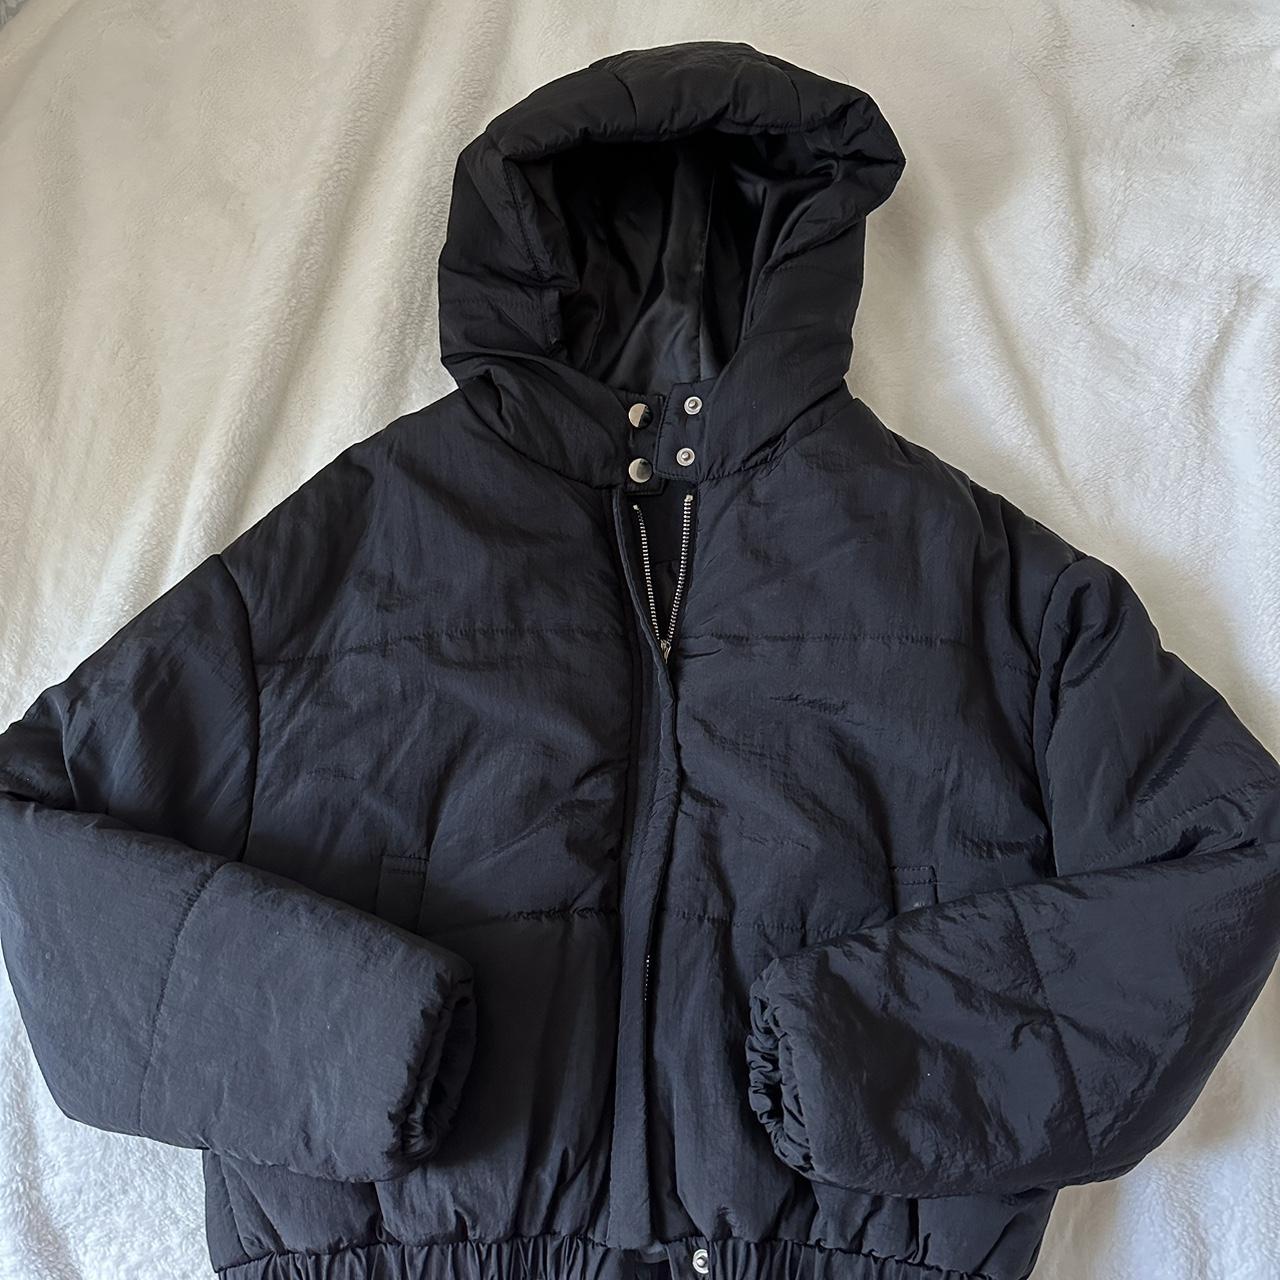 Black puffer jacket - Depop